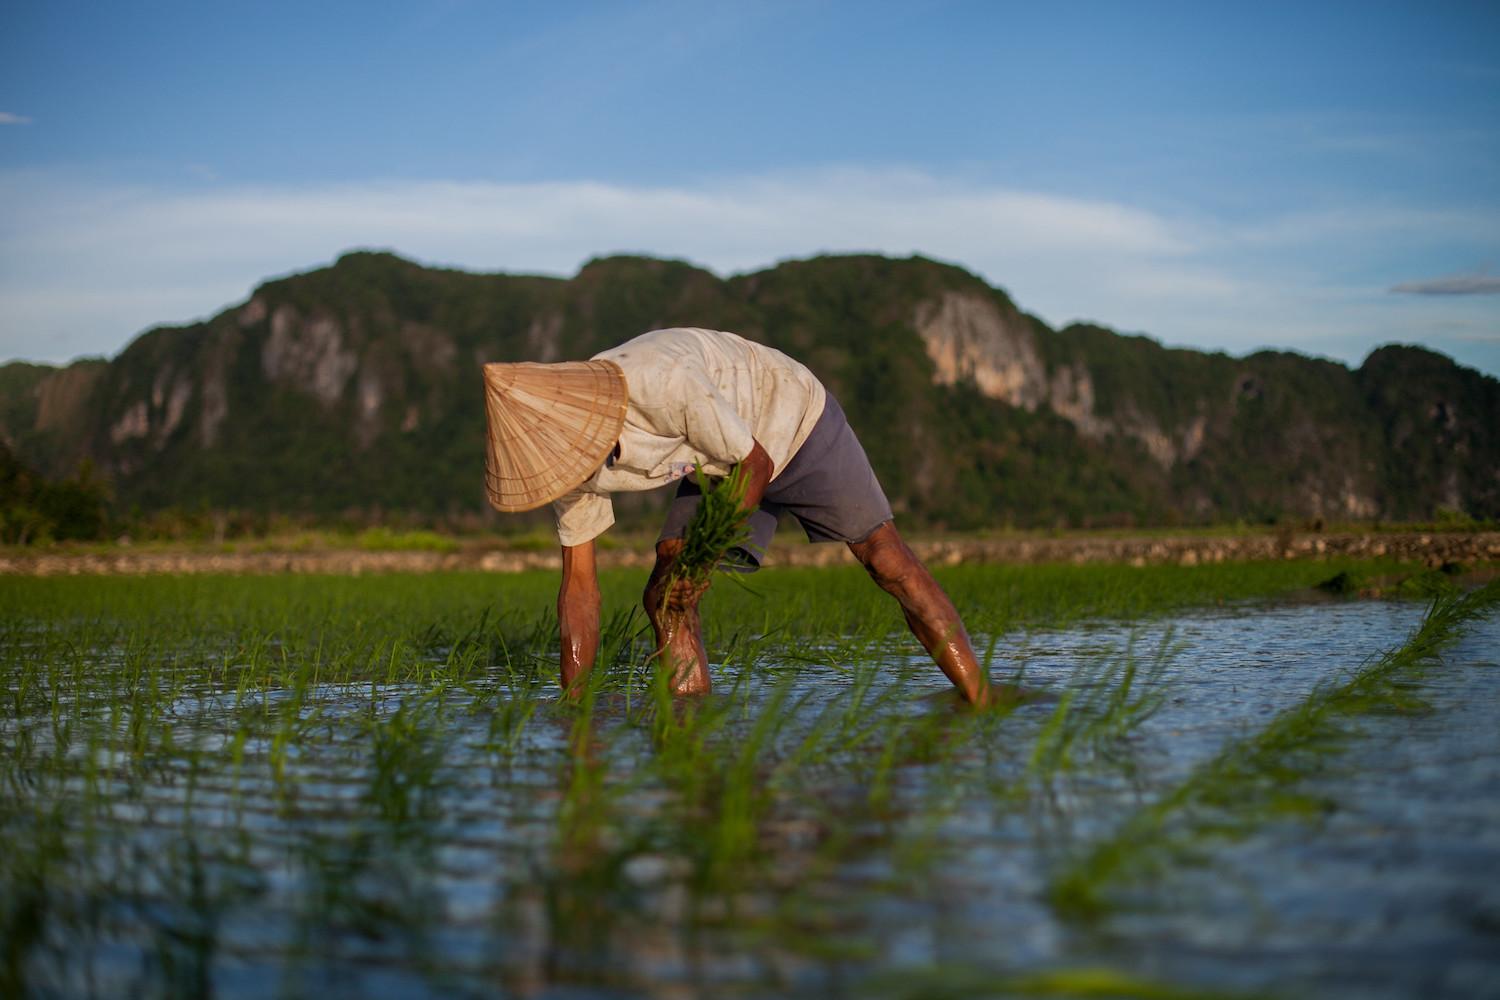 smallholder farms - farmer plants rice in field in indonesia